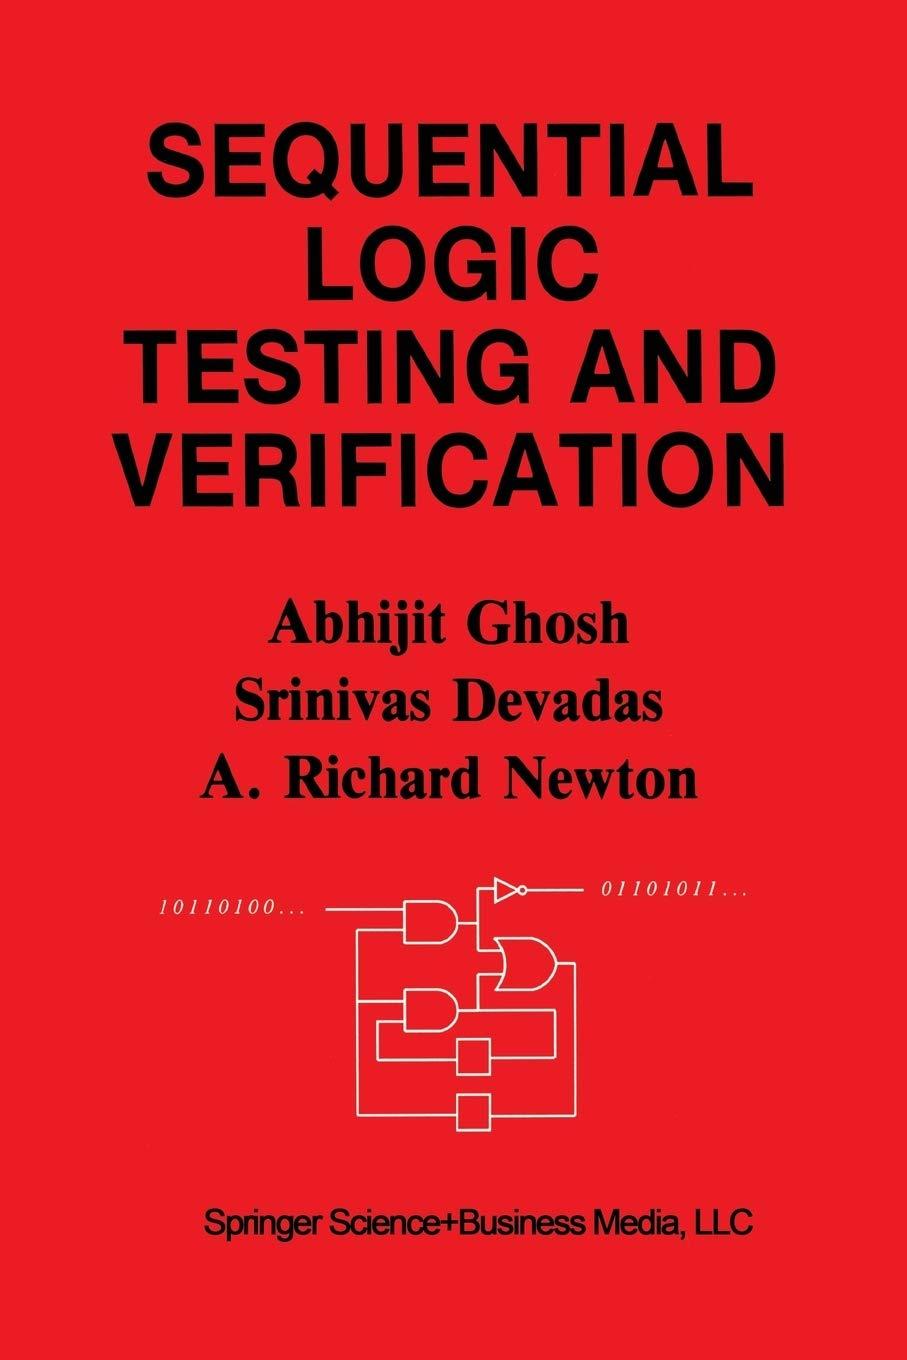 sequential logic testing and verification 1992 edition abhijit ghosh, srinivas devadas, a. richard newton